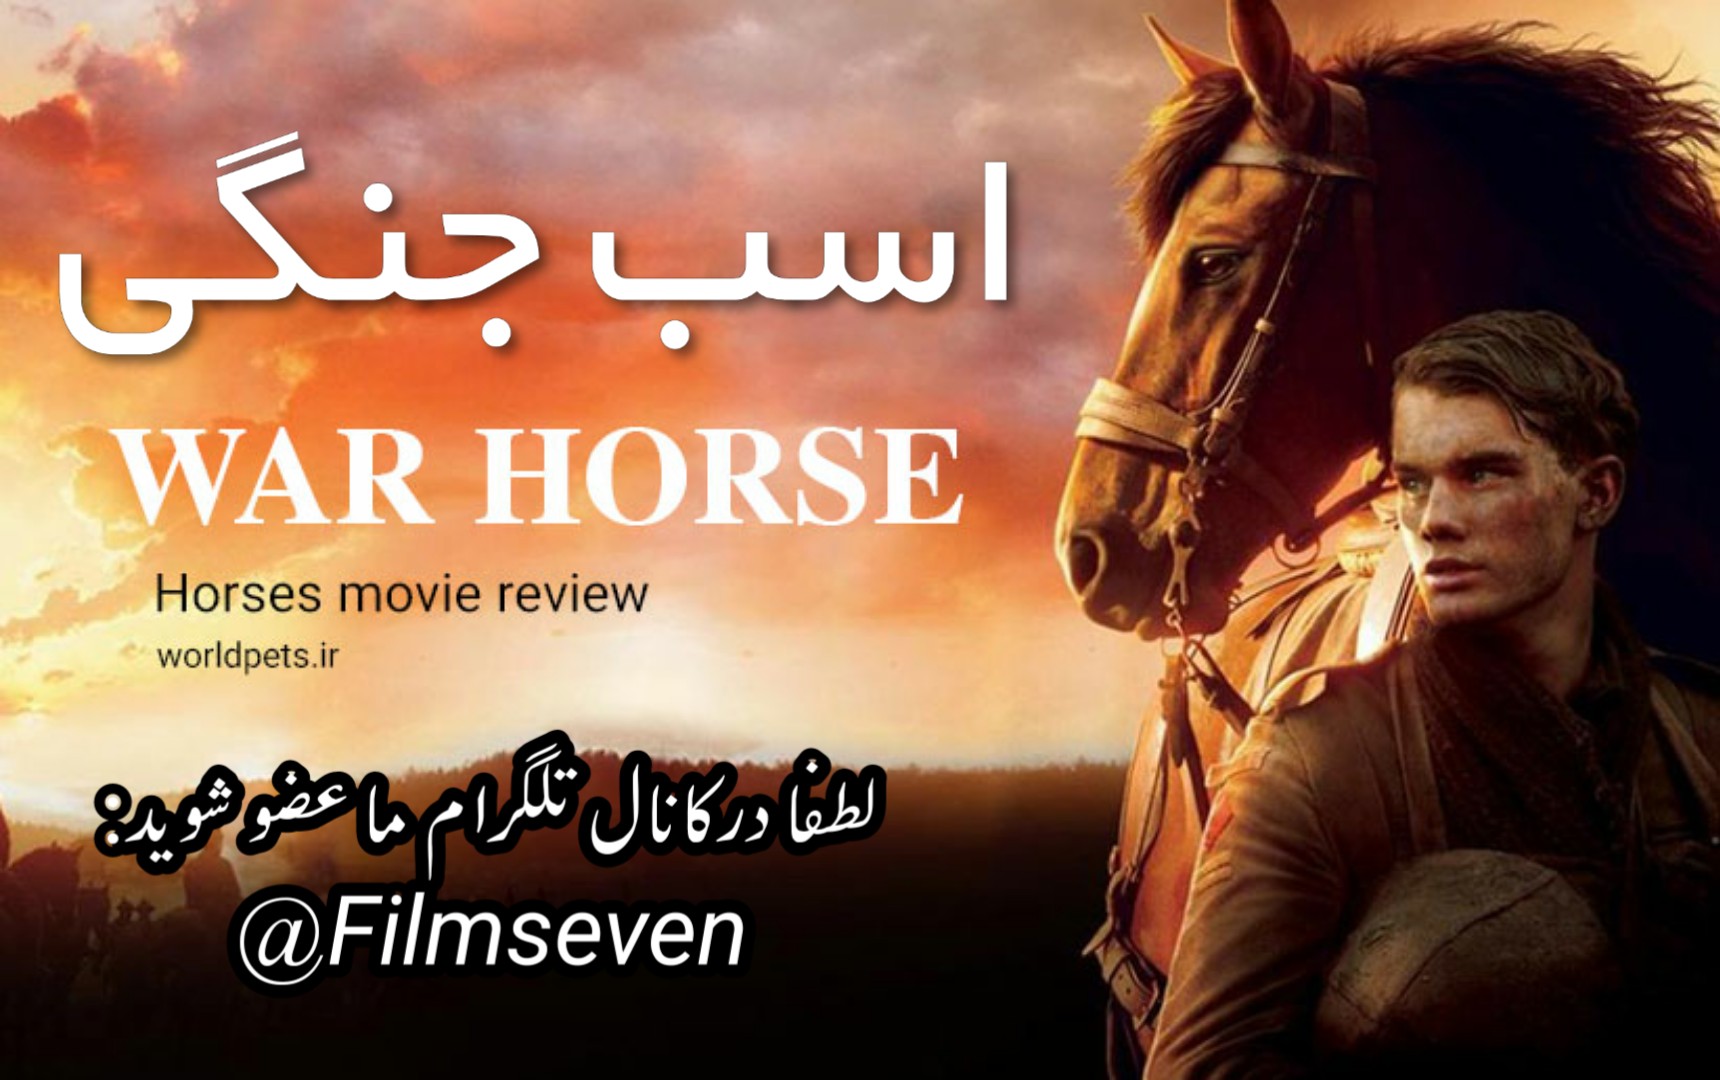 فیلم War Horse 2011 - اسب جنگی با دوبله فارسی